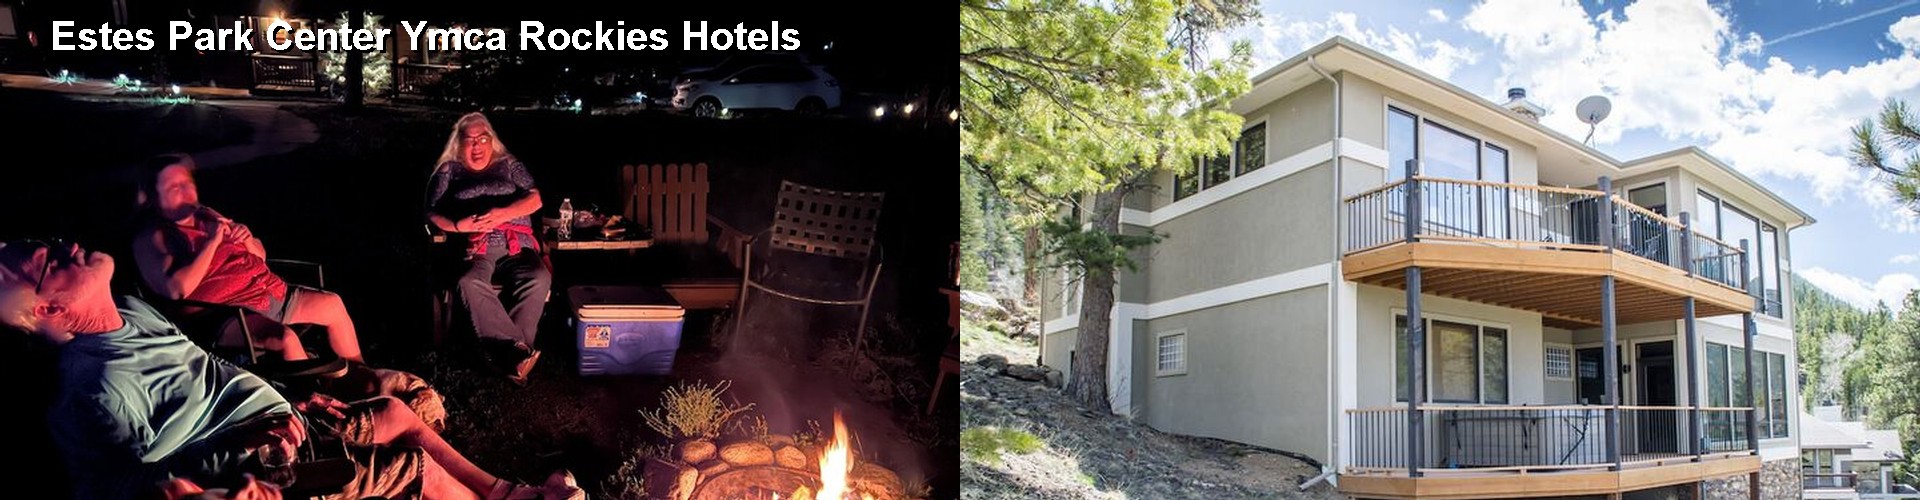 5 Best Hotels near Estes Park Center Ymca Rockies